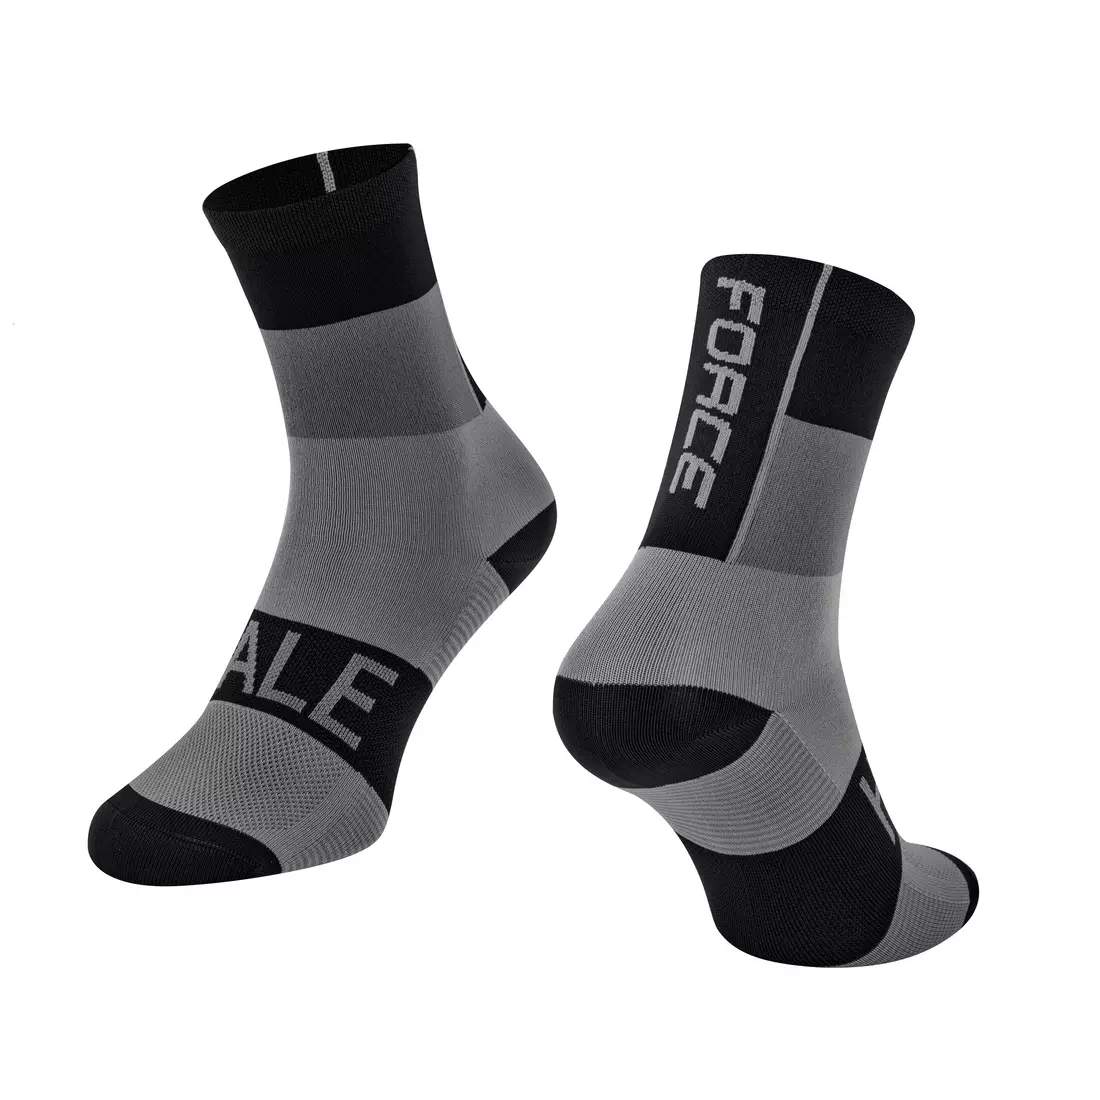 FORCE HALE cycling socks/sport socks, black and gray